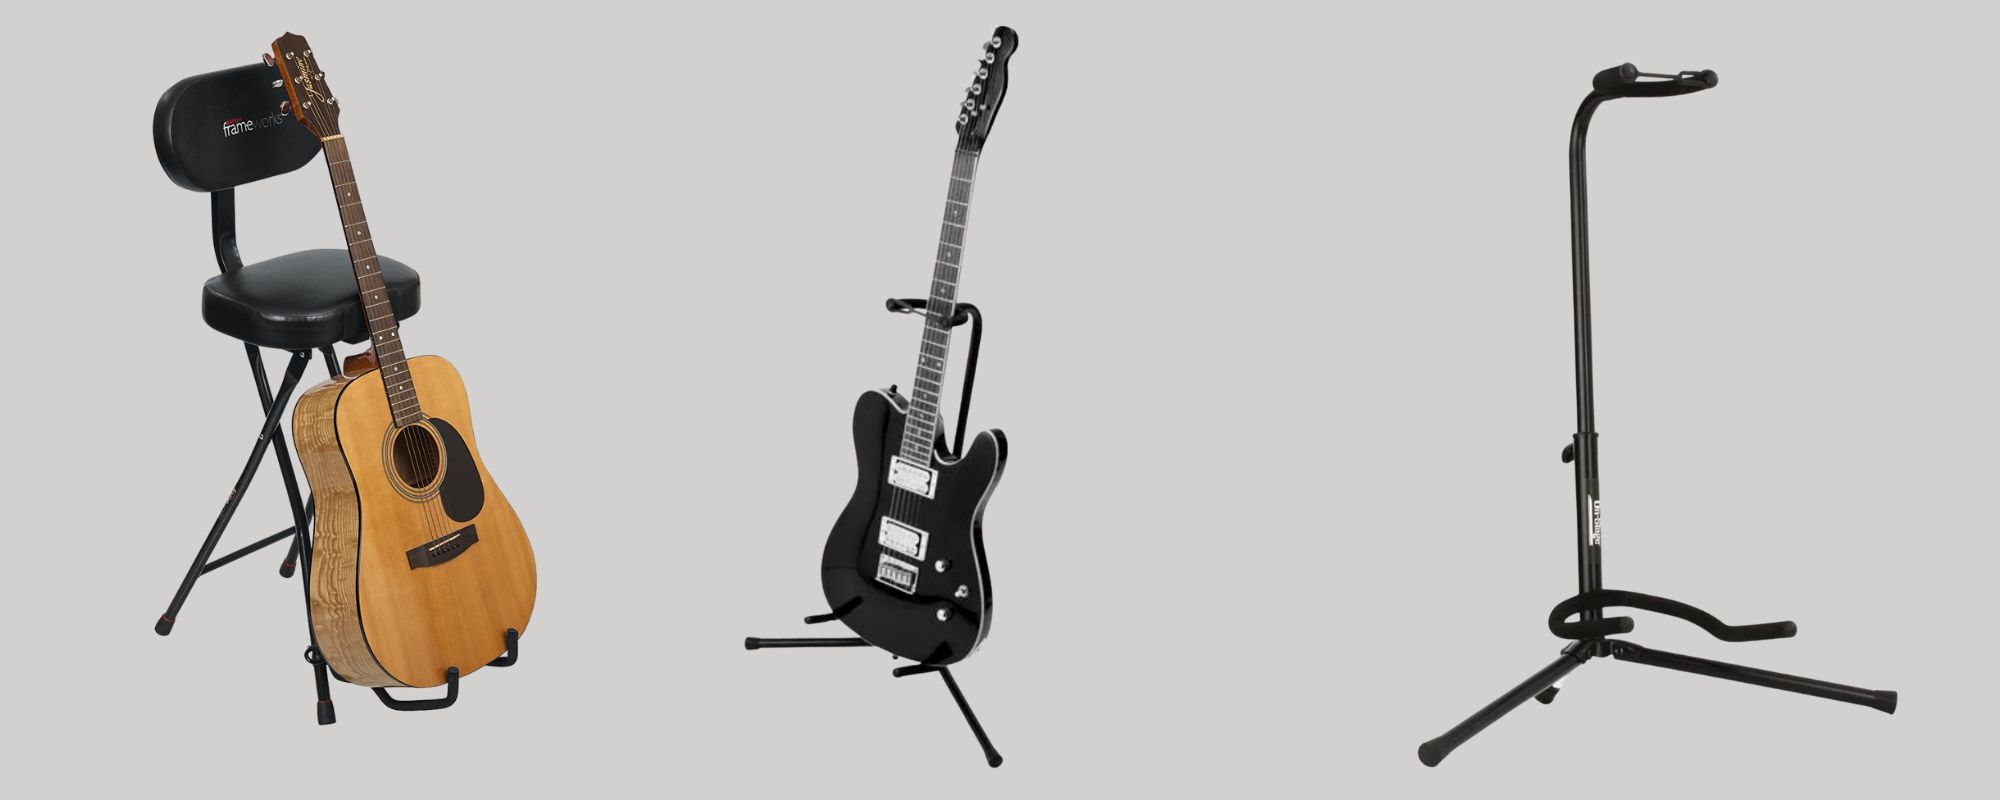 Mini Guitar Miniature Model Electric Guitar Model with Case Stand Popurlar  Strings Instrument Design